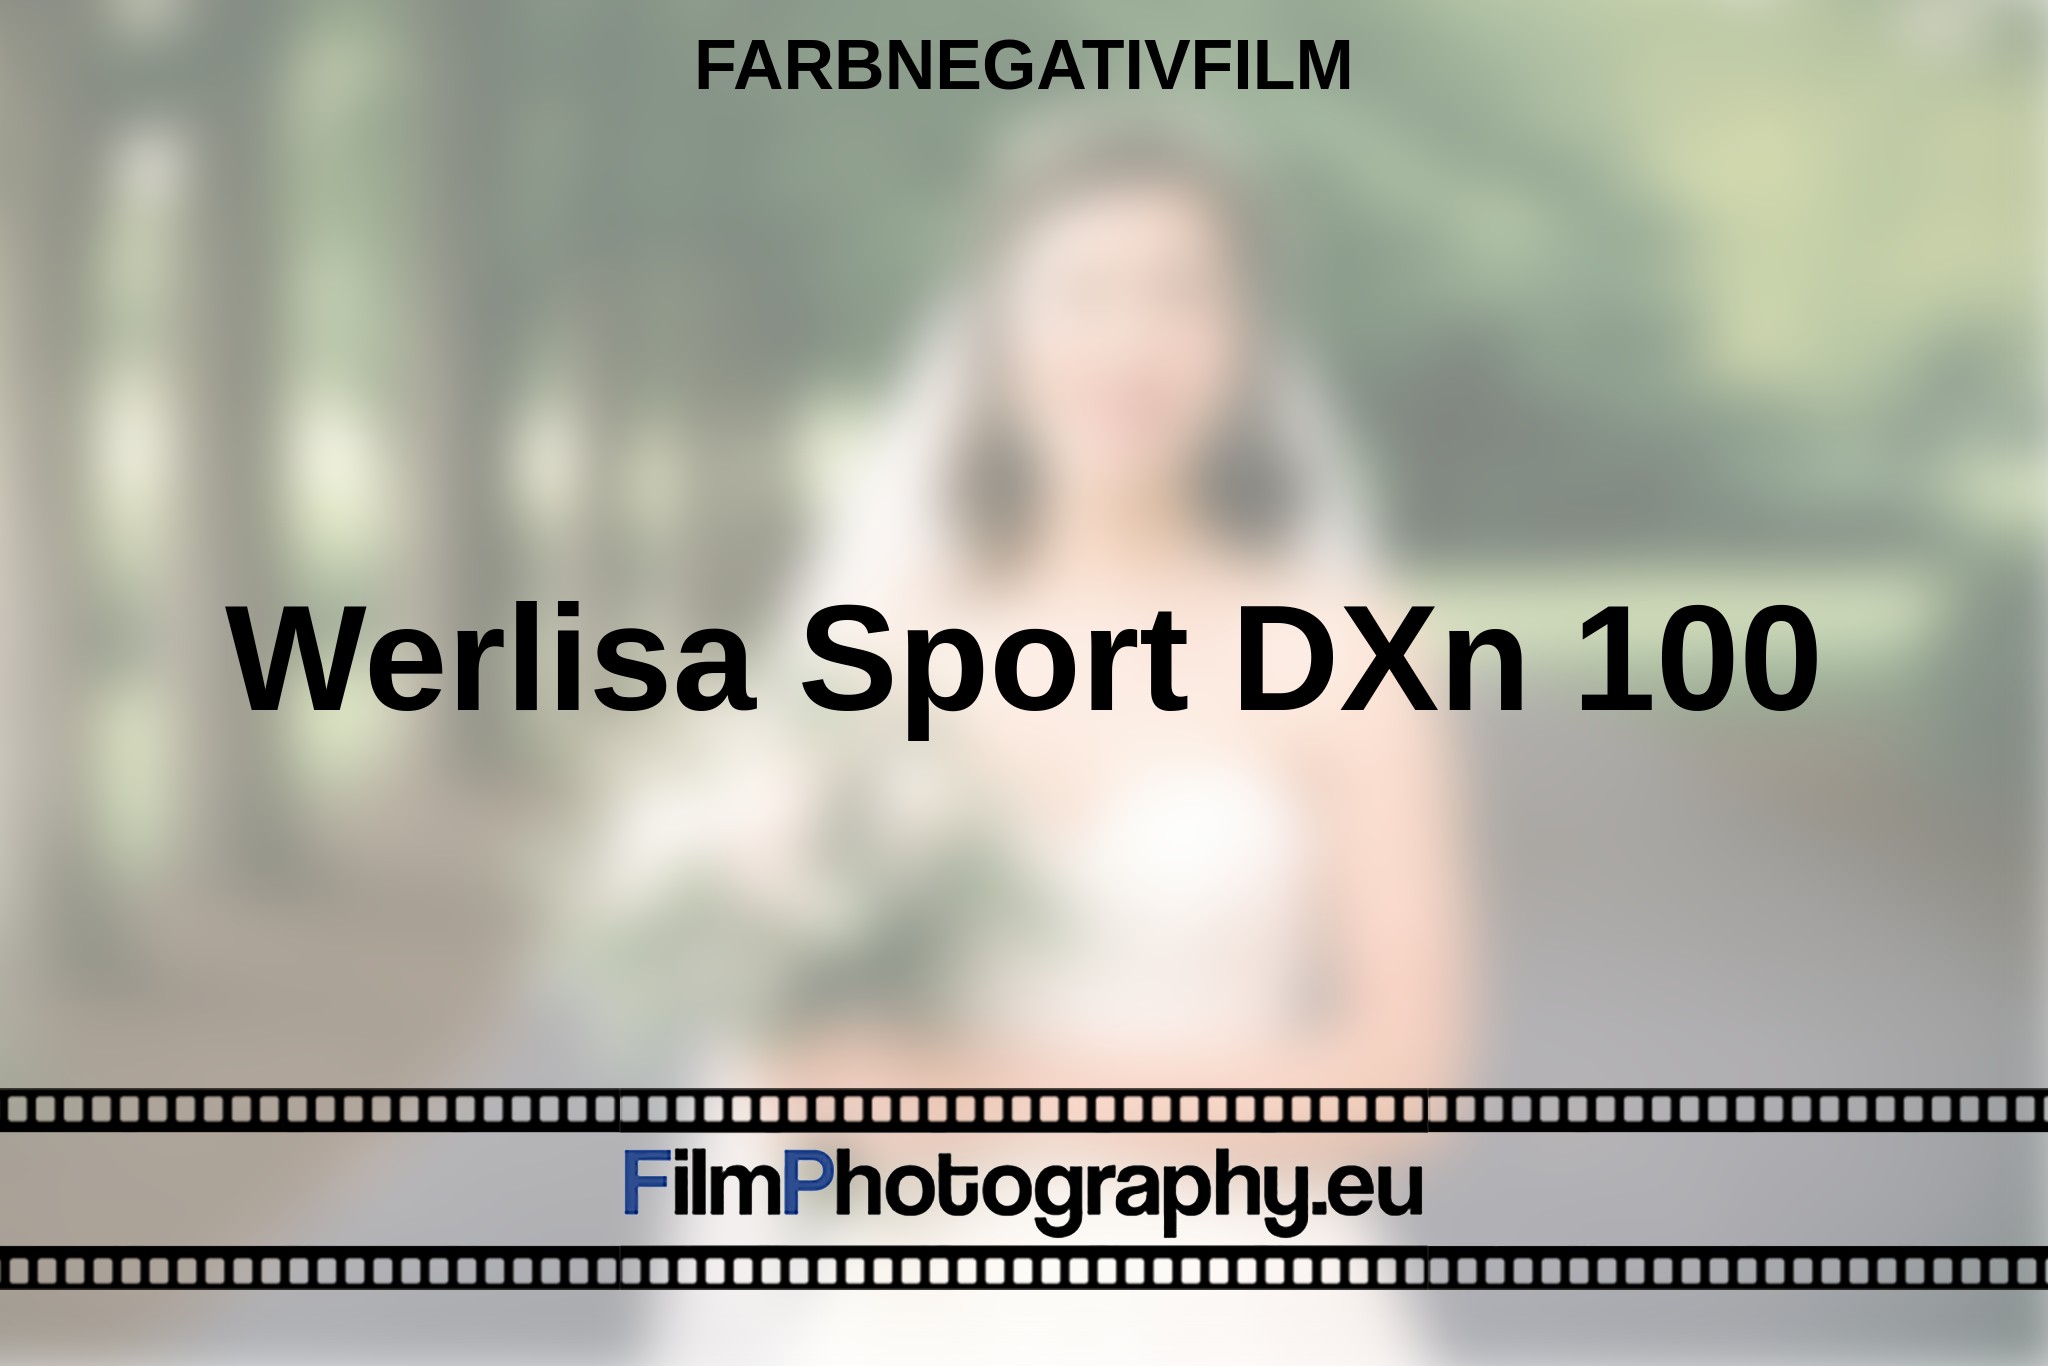 werlisa-sport-dxn-100-farbnegativfilm-bnv.jpg